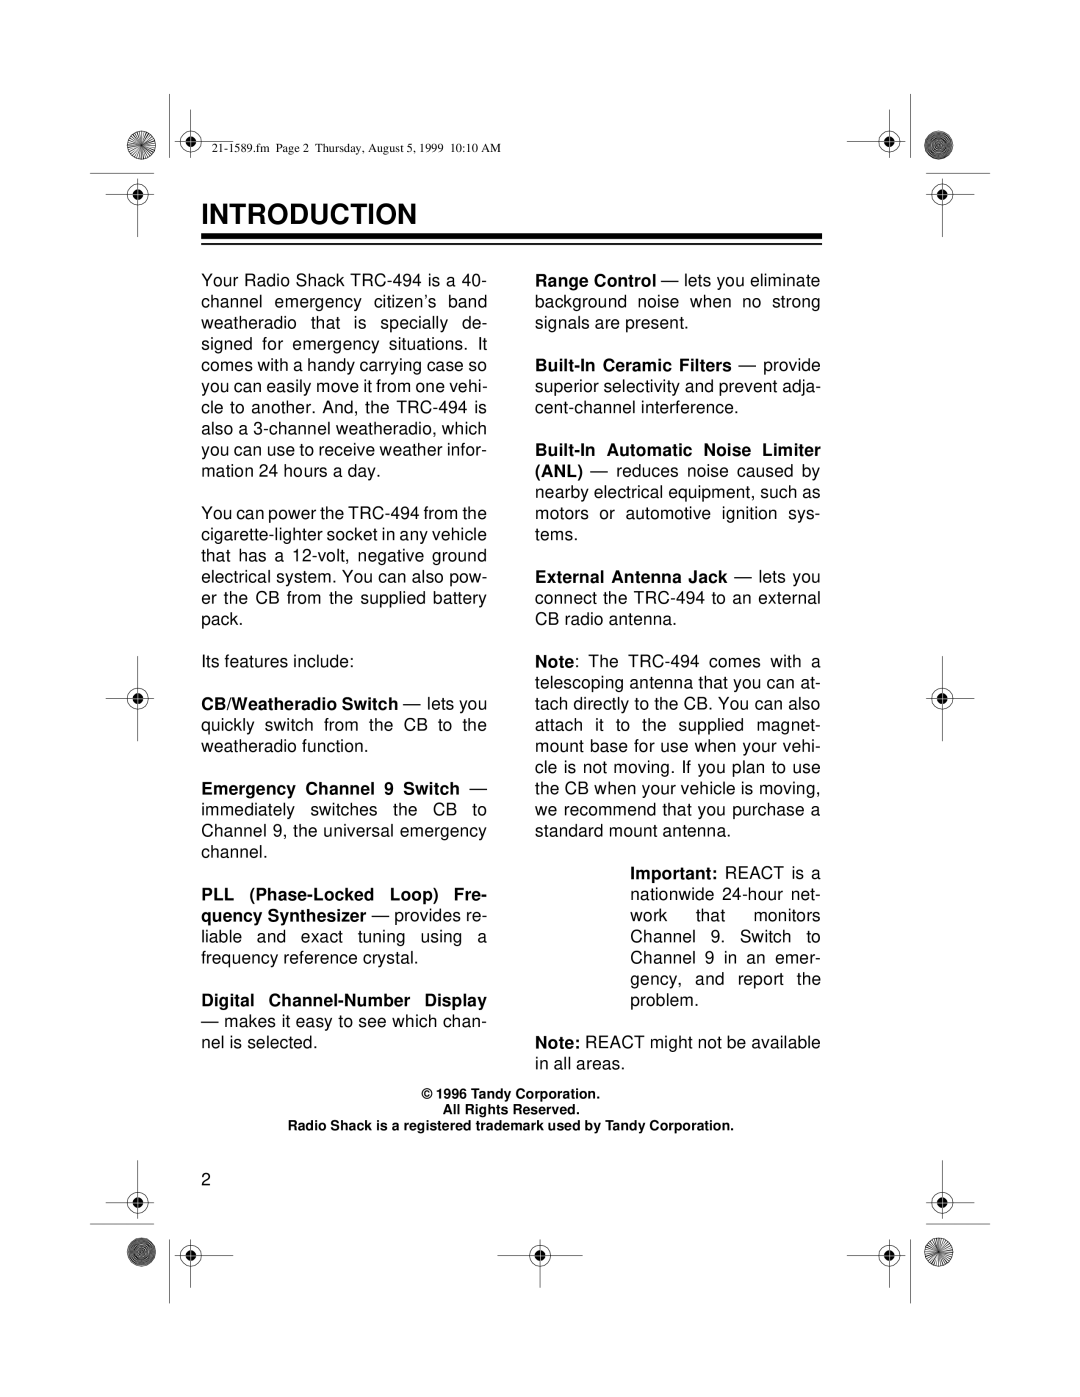 Radio Shack TRC-494 owner manual Introduction 